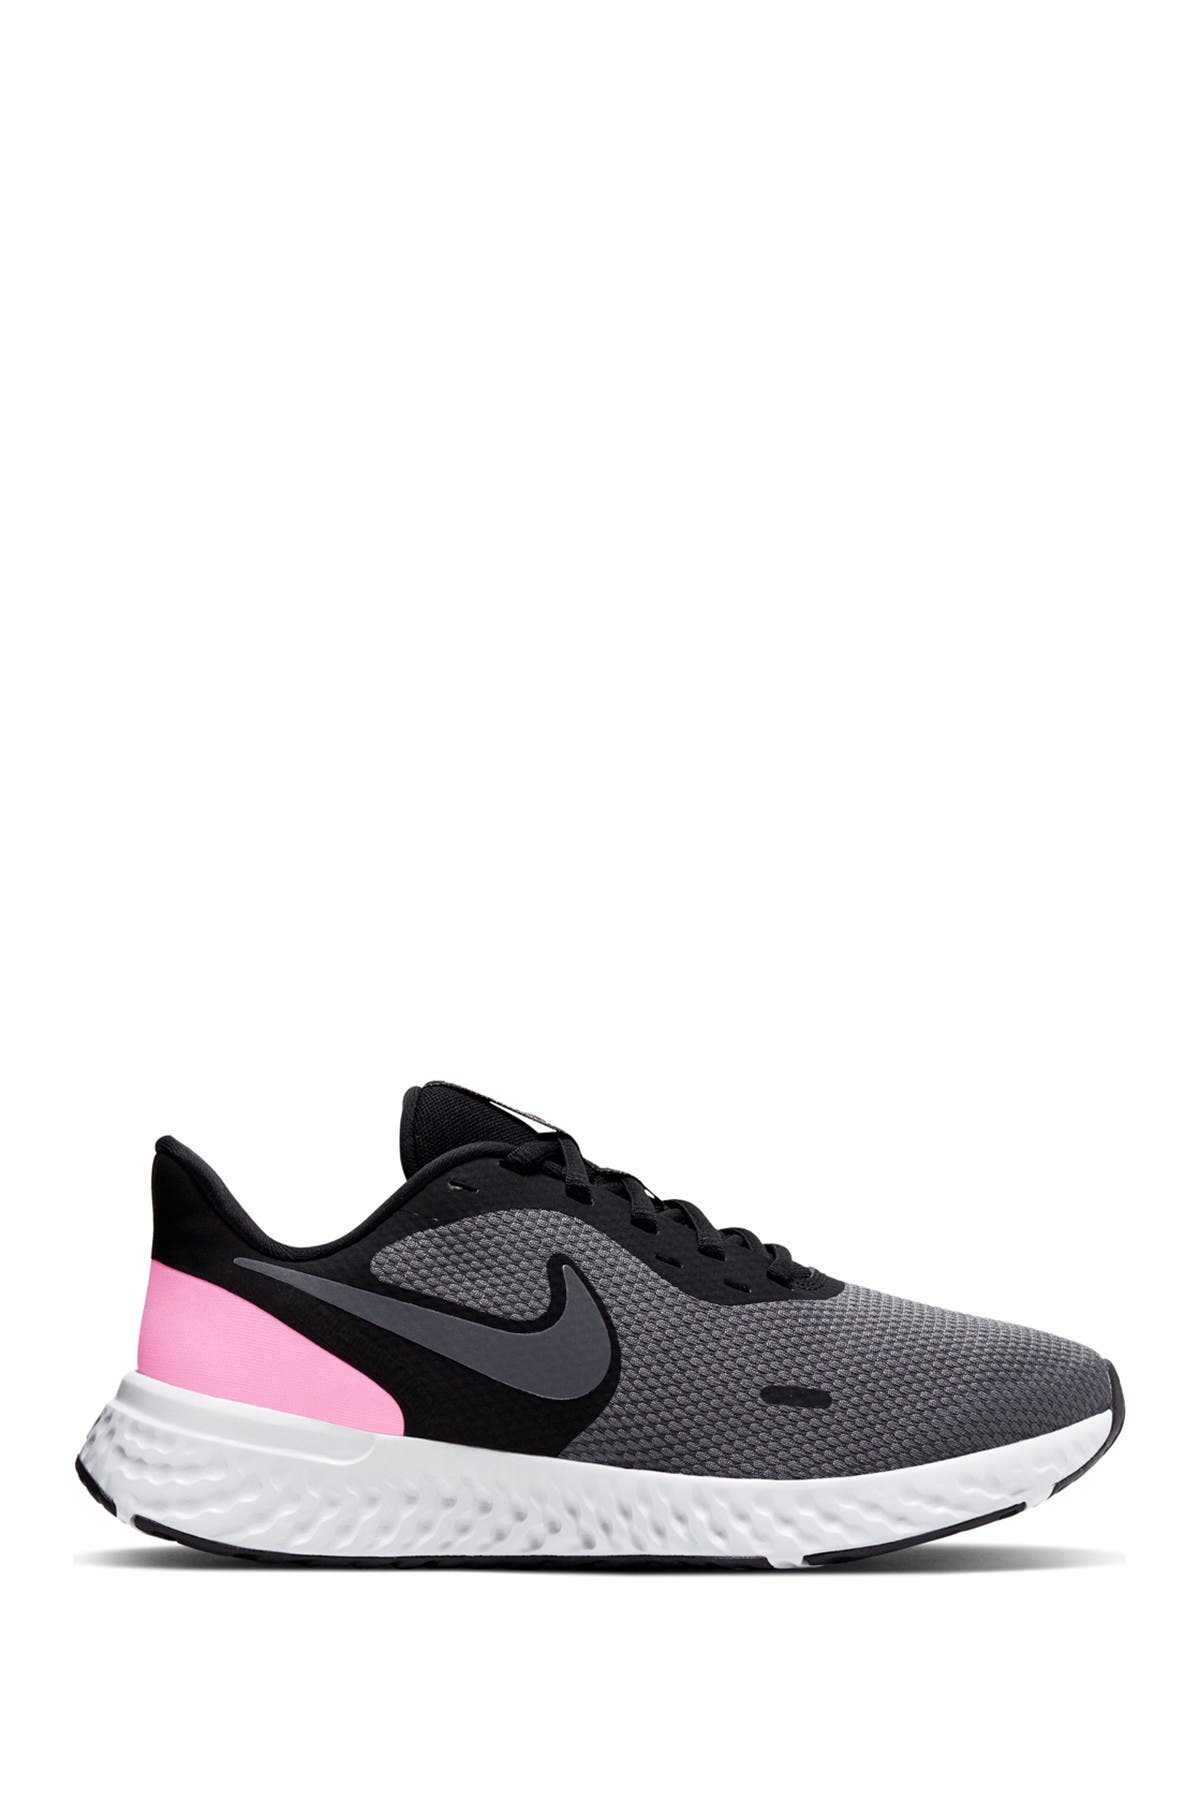 Nike | Revolution 5 Running Shoe - Wide 